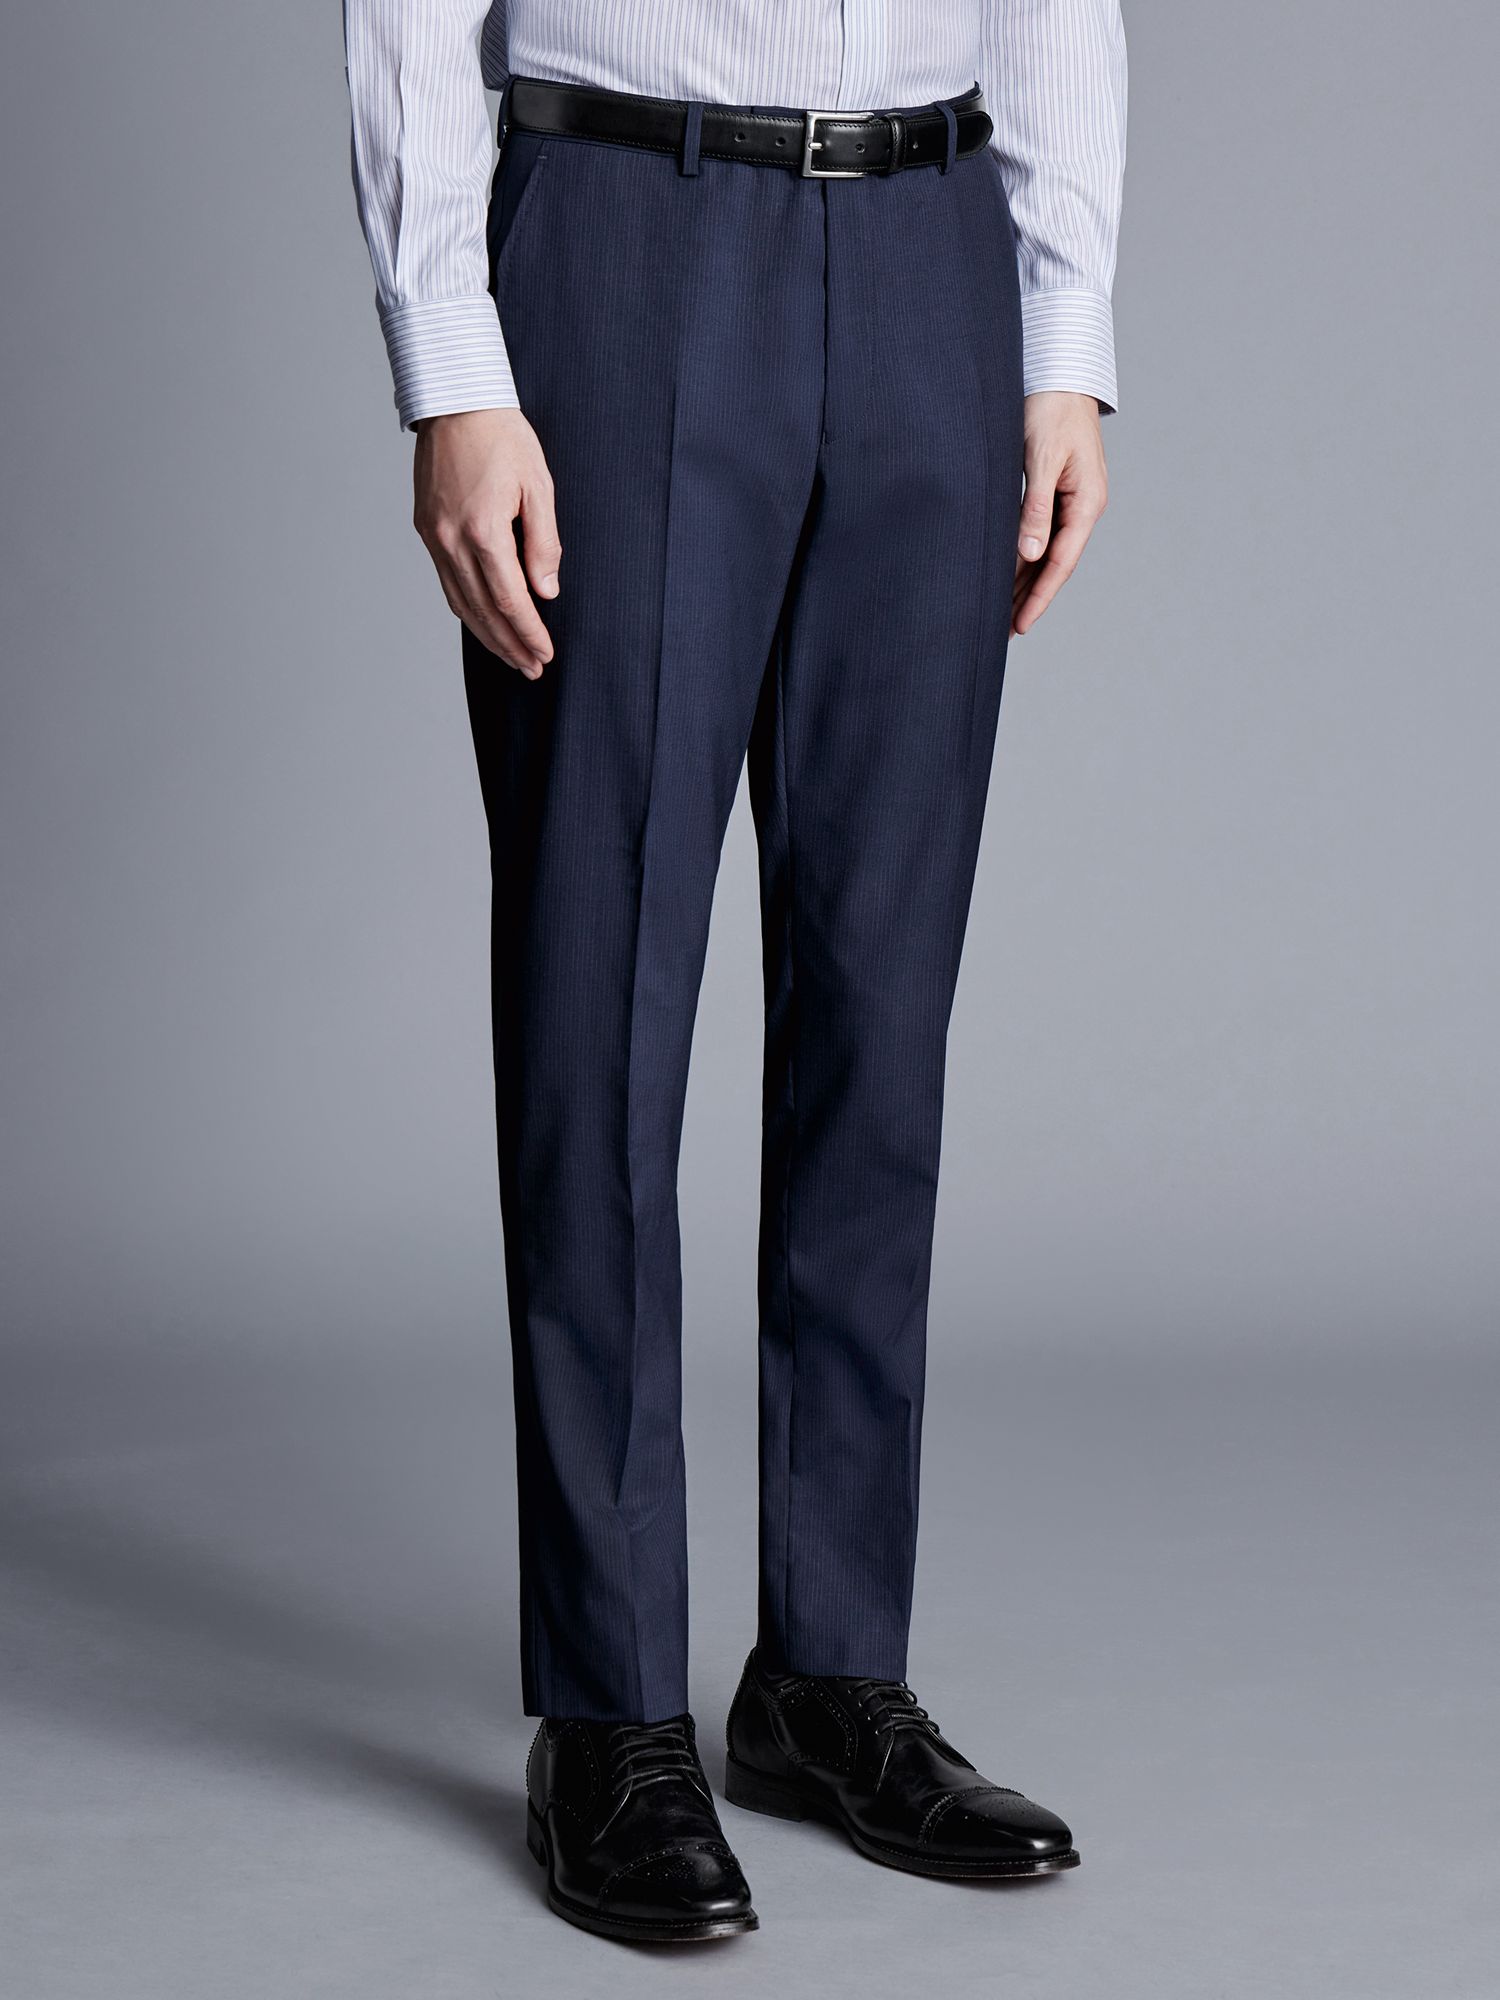 Charles Tyrwhitt Slim Fit Stripe Suit Trousers, Navy at John Lewis ...